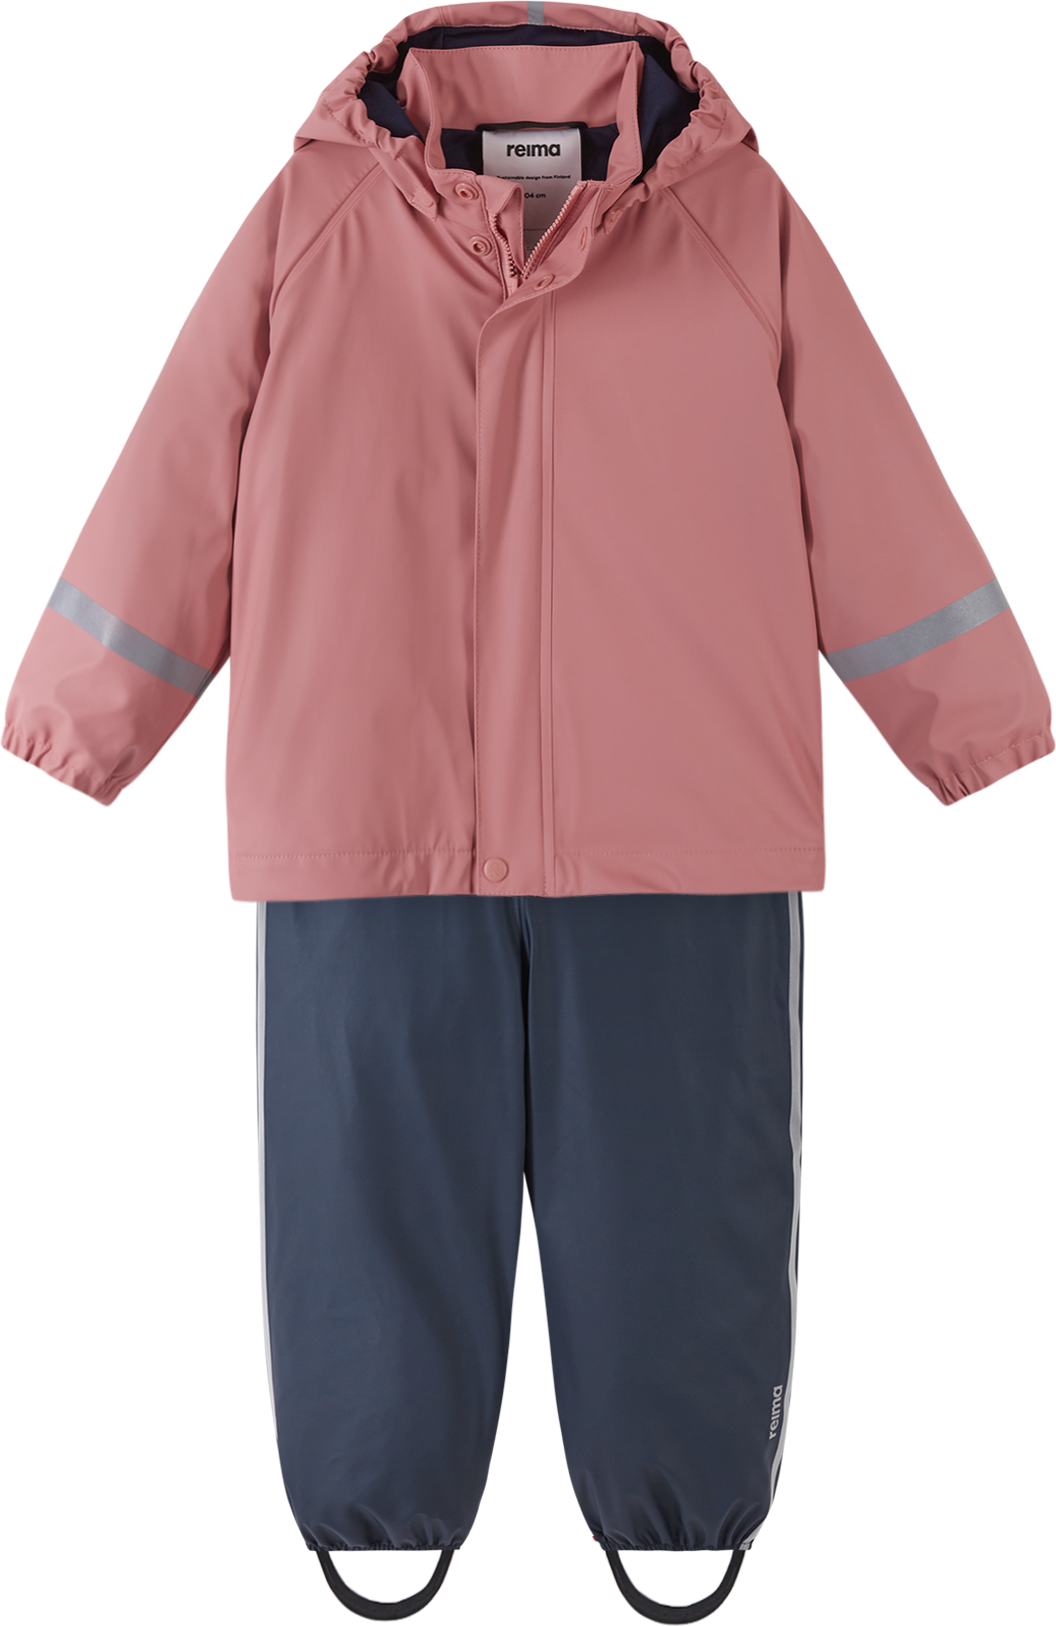 Reima Kids' Tipotella Rain Outfit Rose Blush 116 cm, Rose Blush